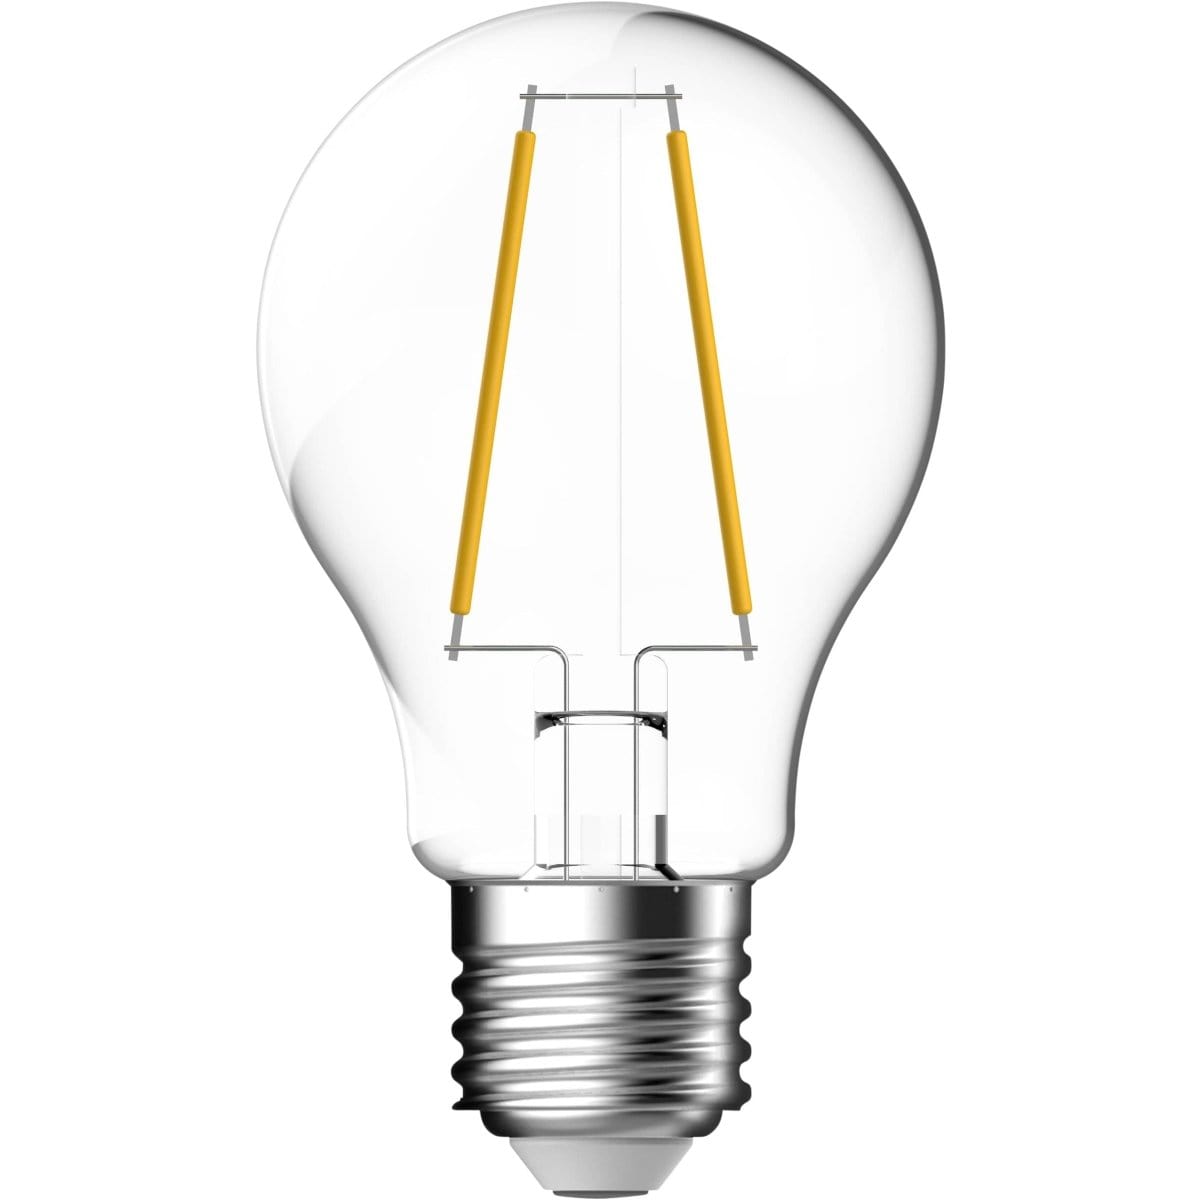 Energetic Light Bulbs E27 A60 Light Bulb Clear